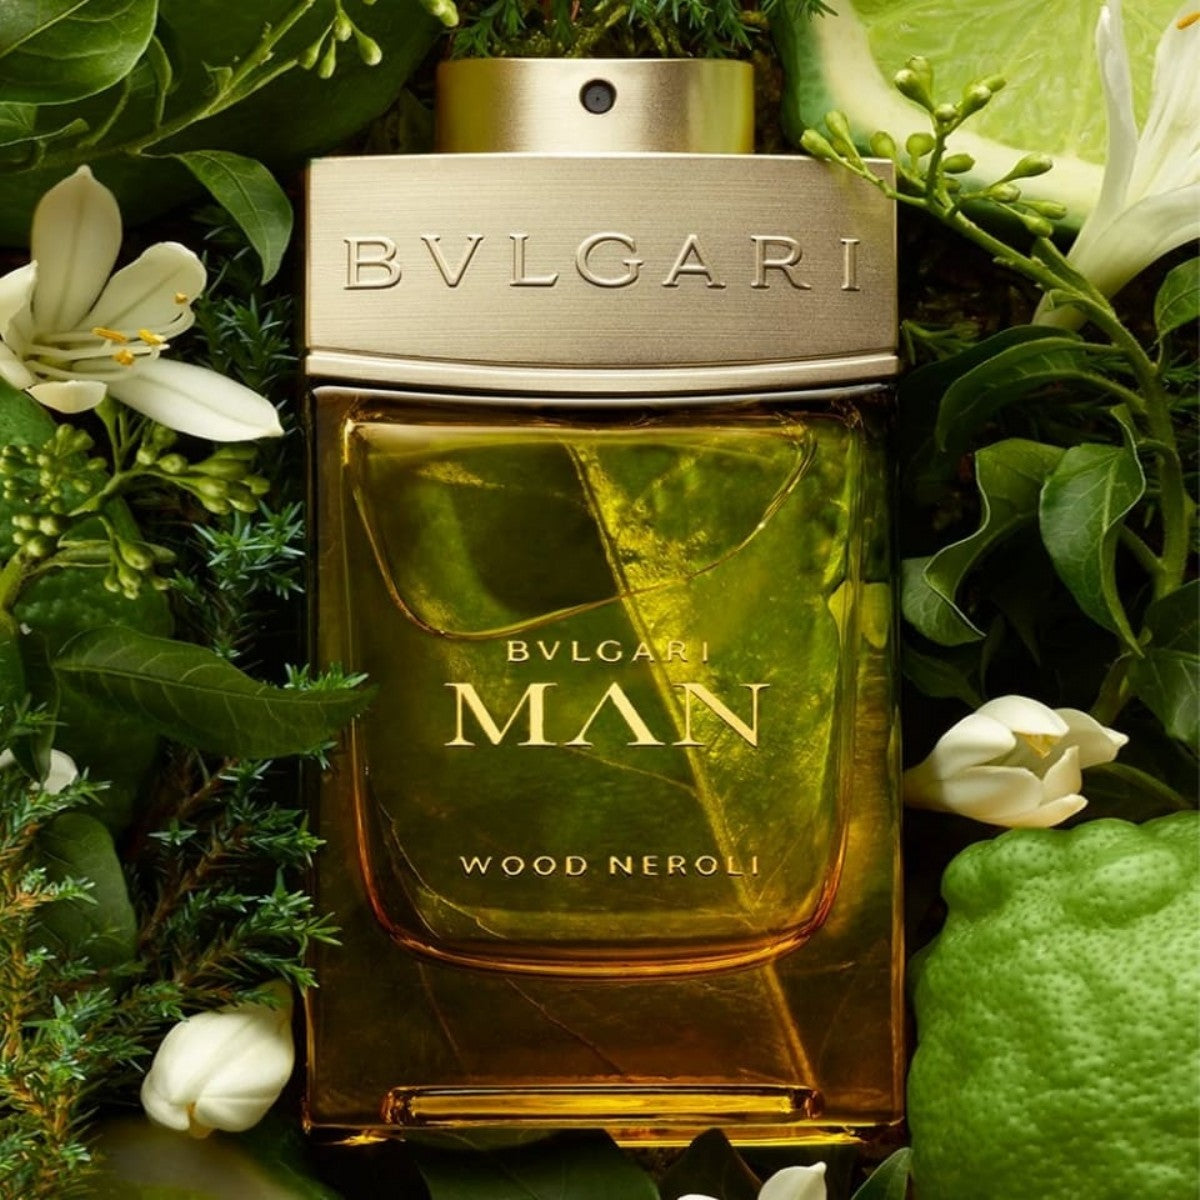 Bvlgari Man Wood Neroli For Men - Eau De Parfum